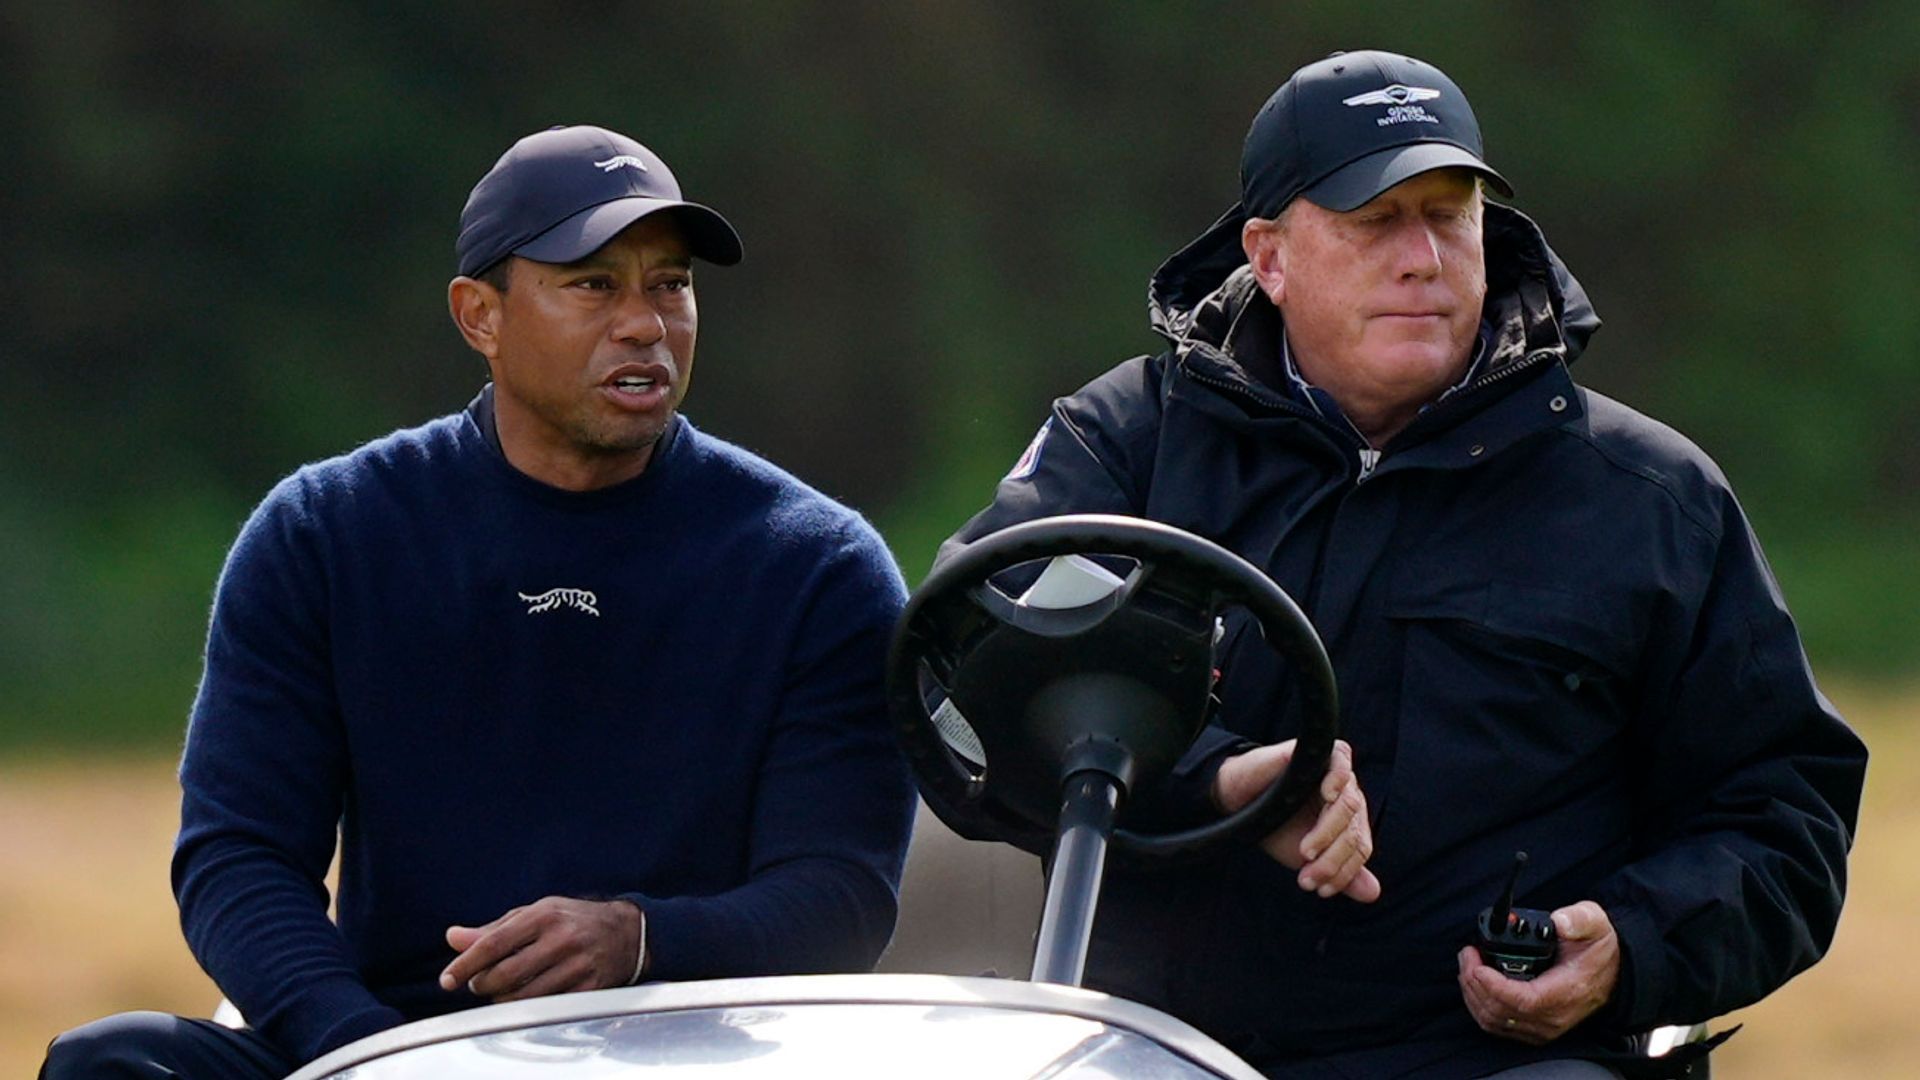 Woods withdraws mid-round in Genesis Invitational comeback